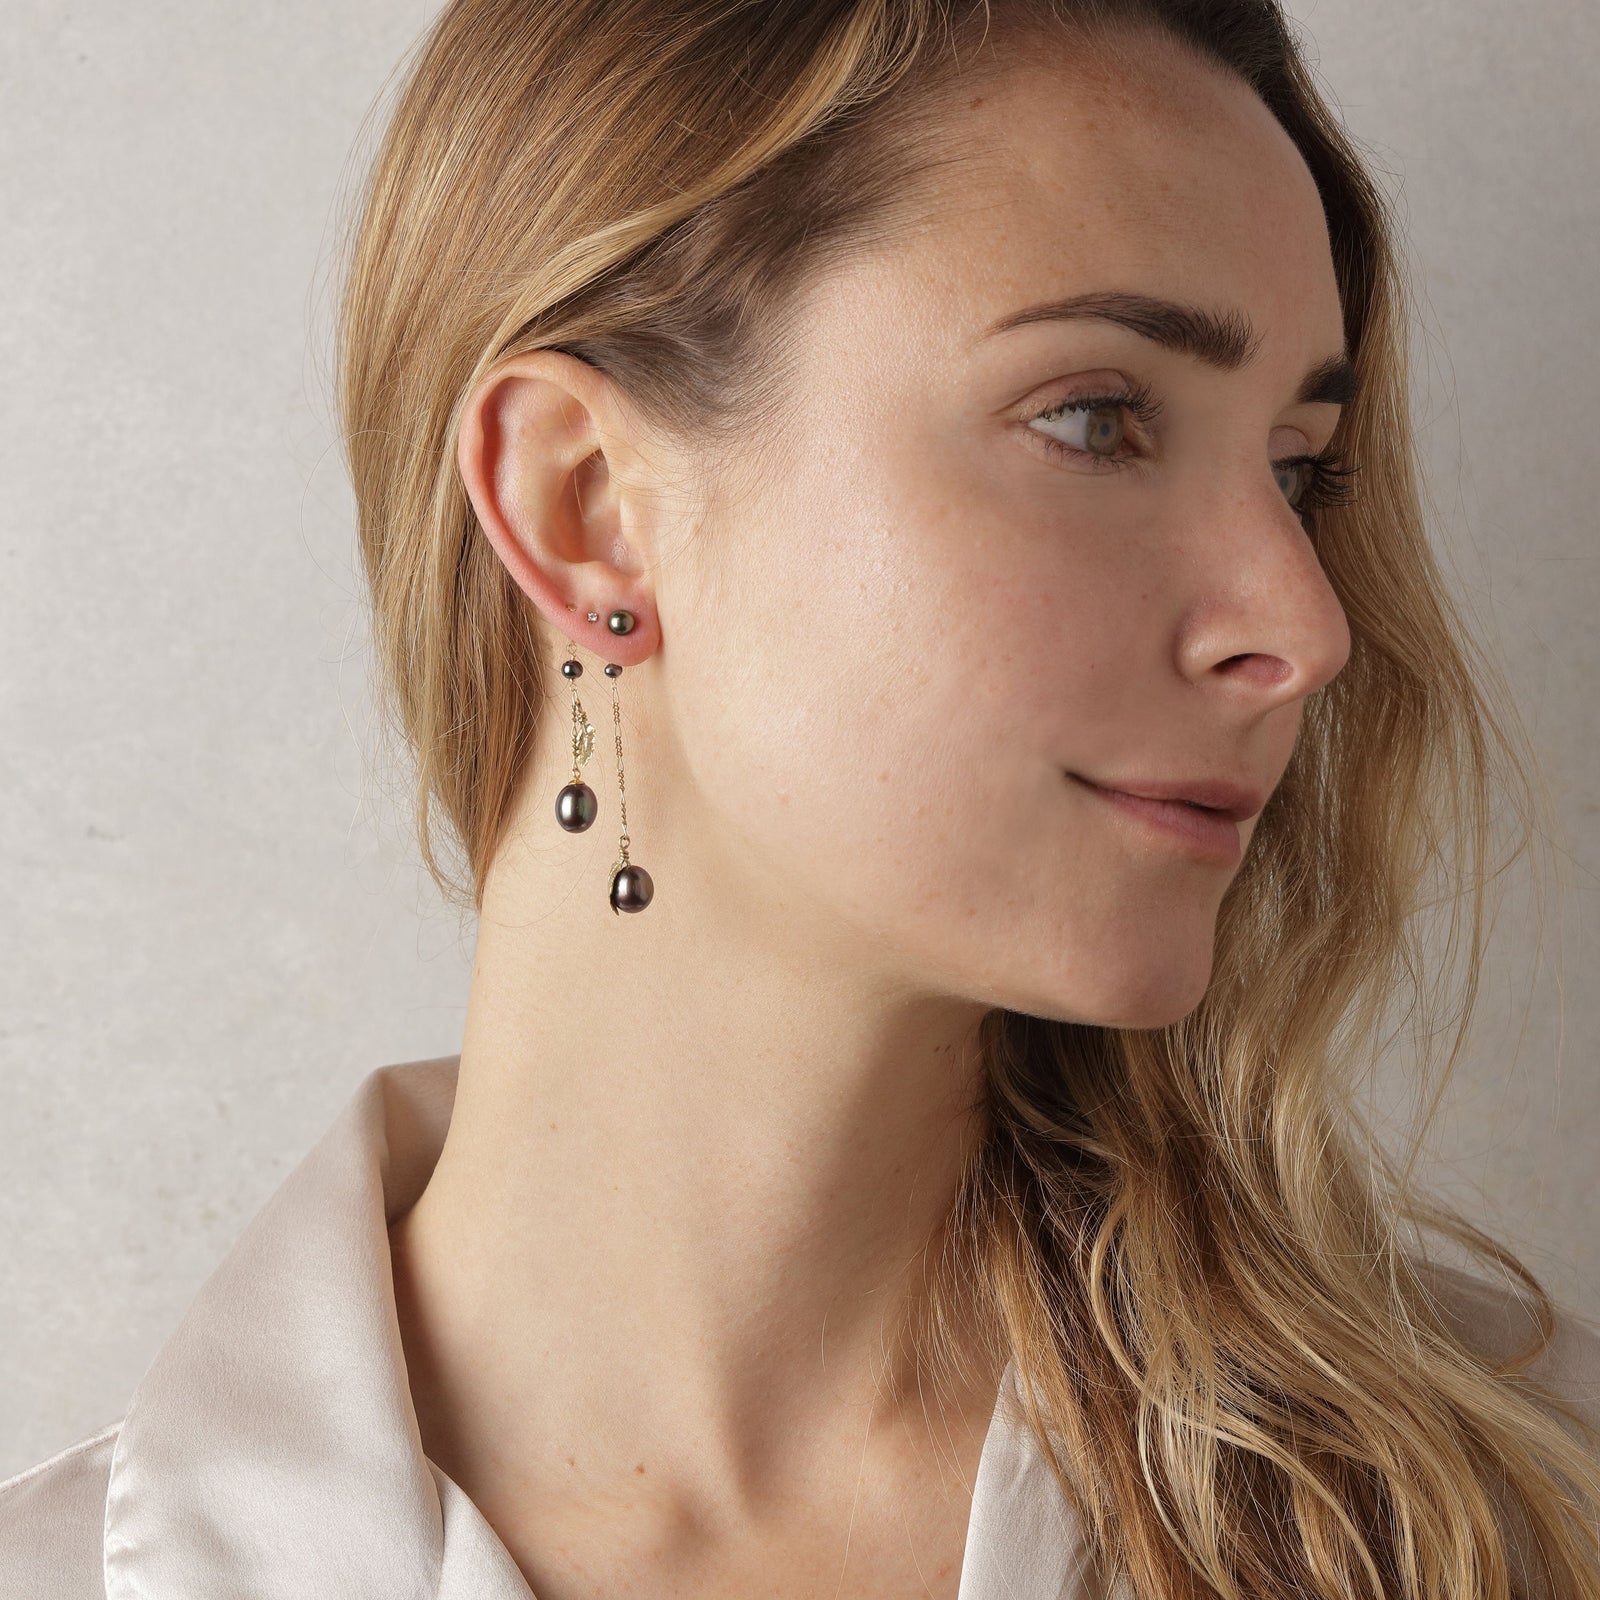 Discover 178+ formal earrings for office